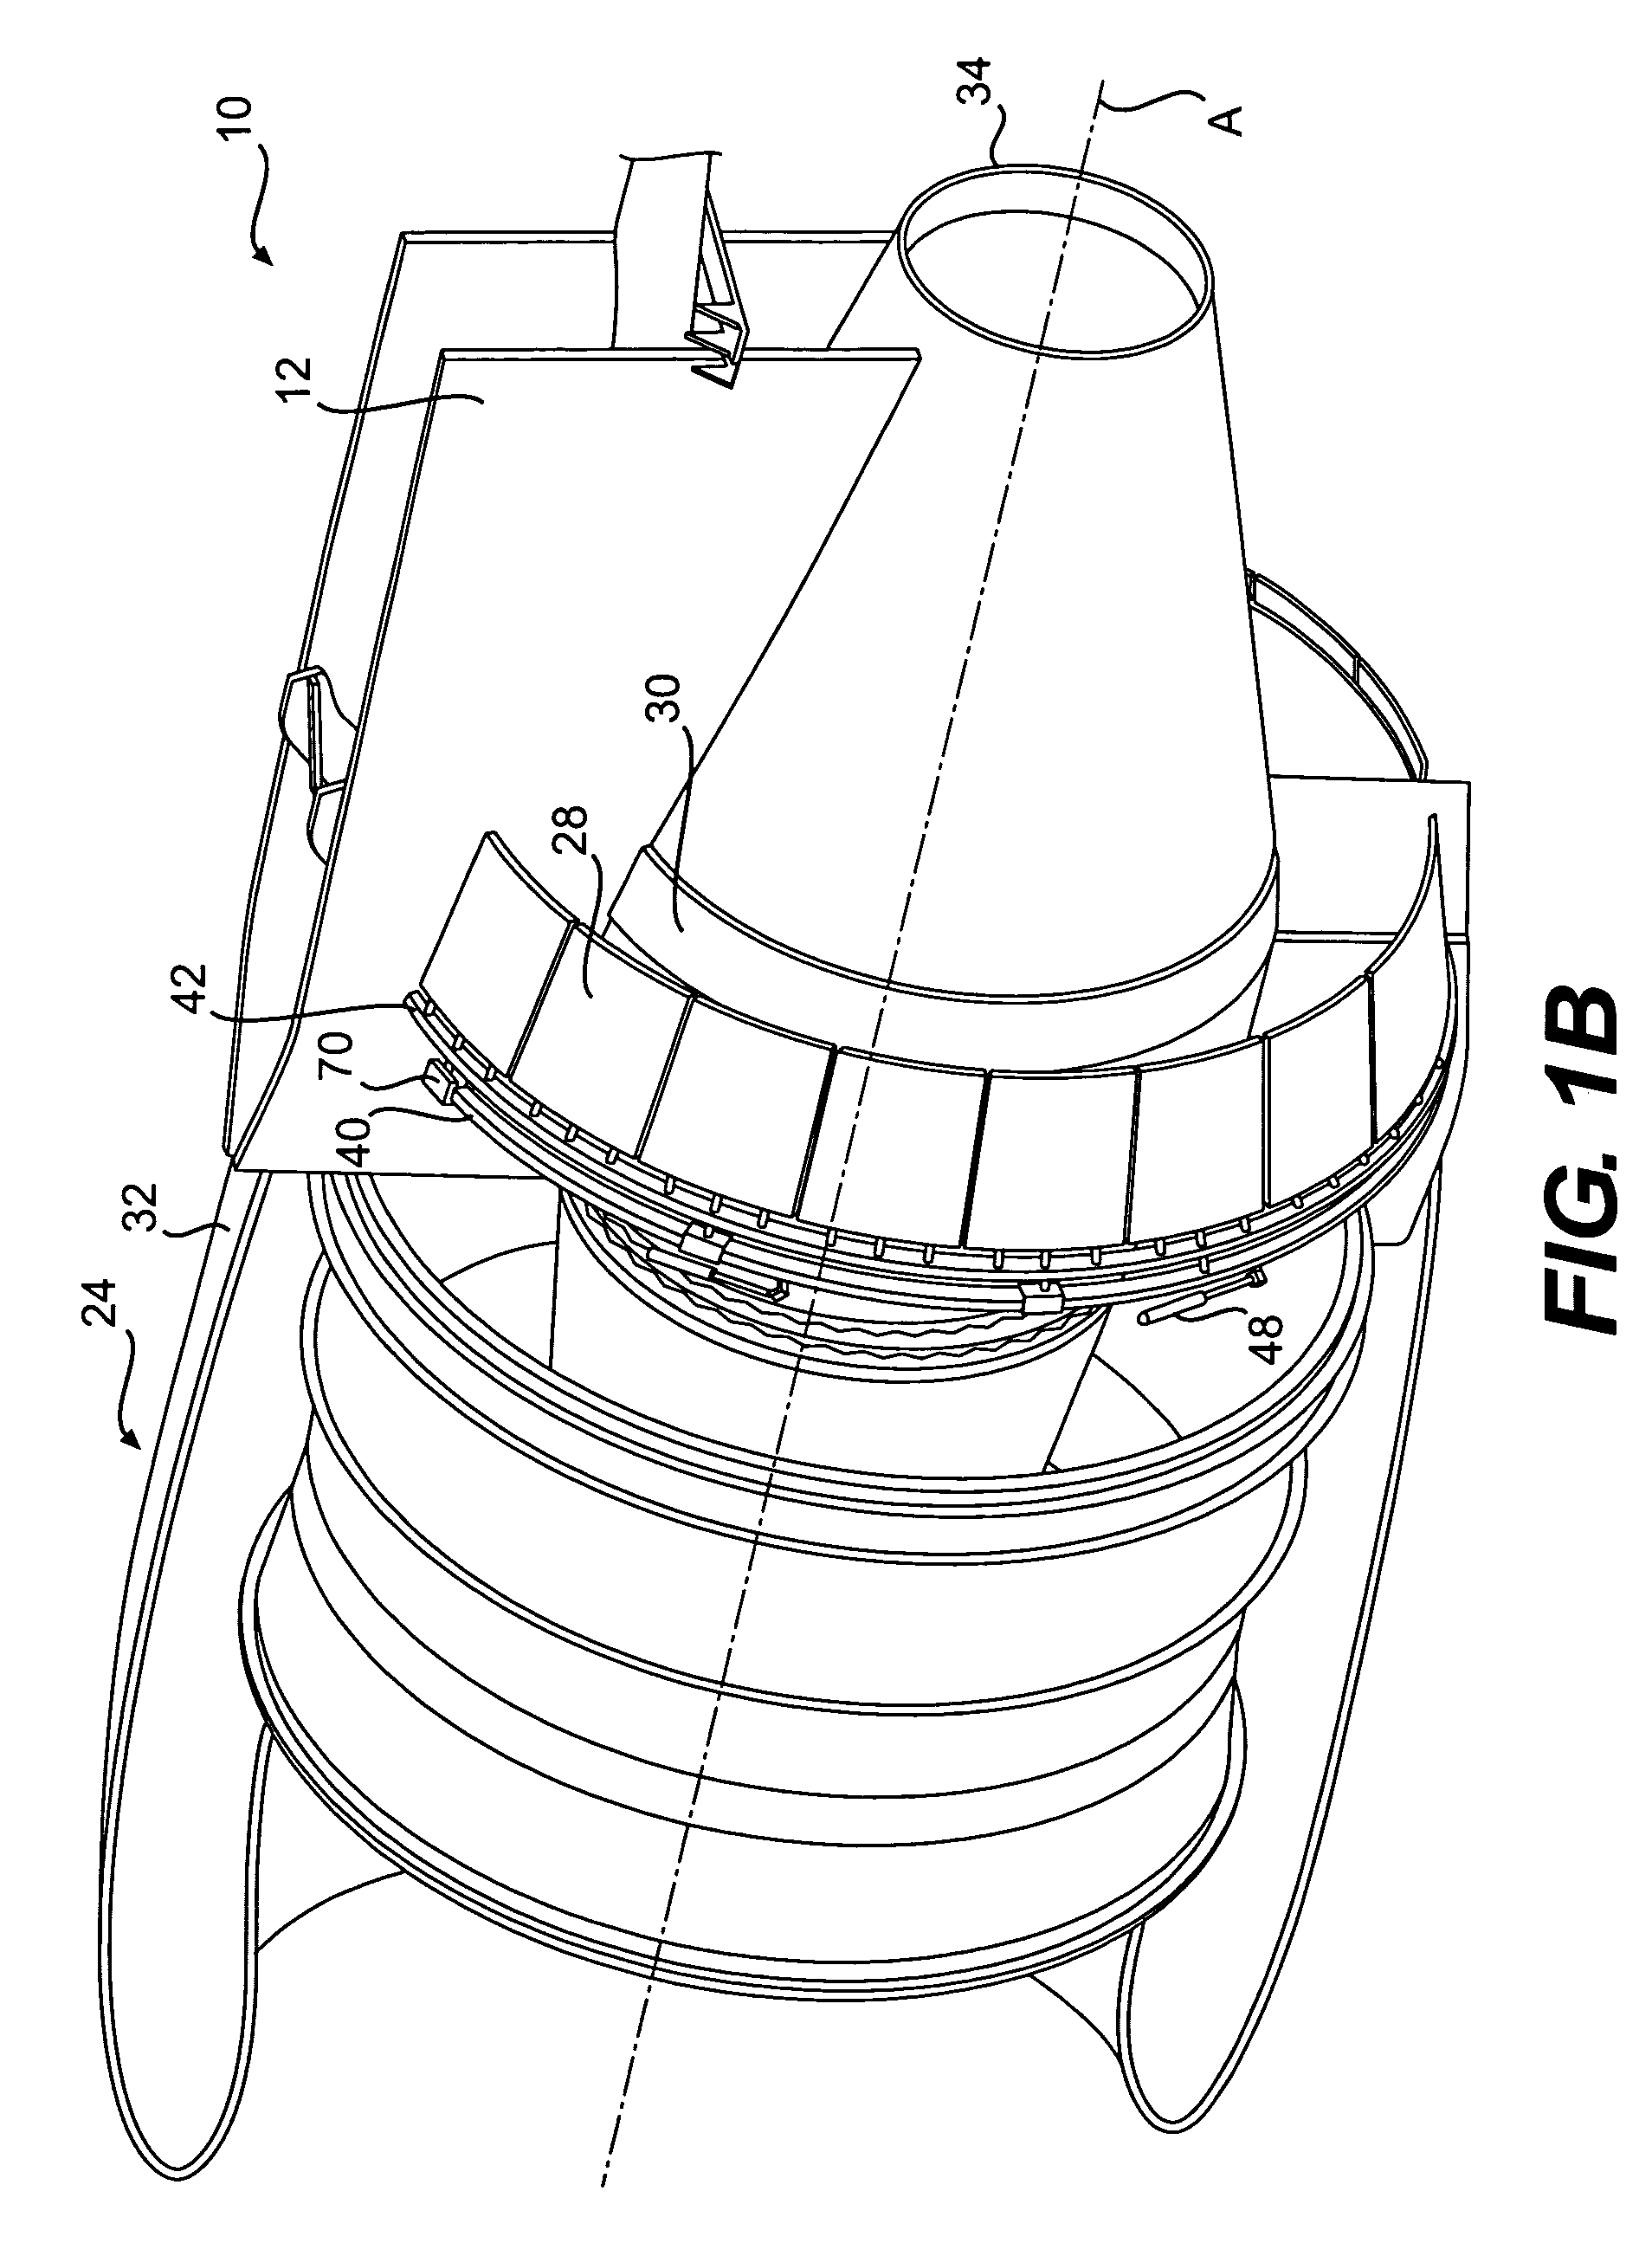 Fan variable area nozzle for a gas turbine engine fan nacelle